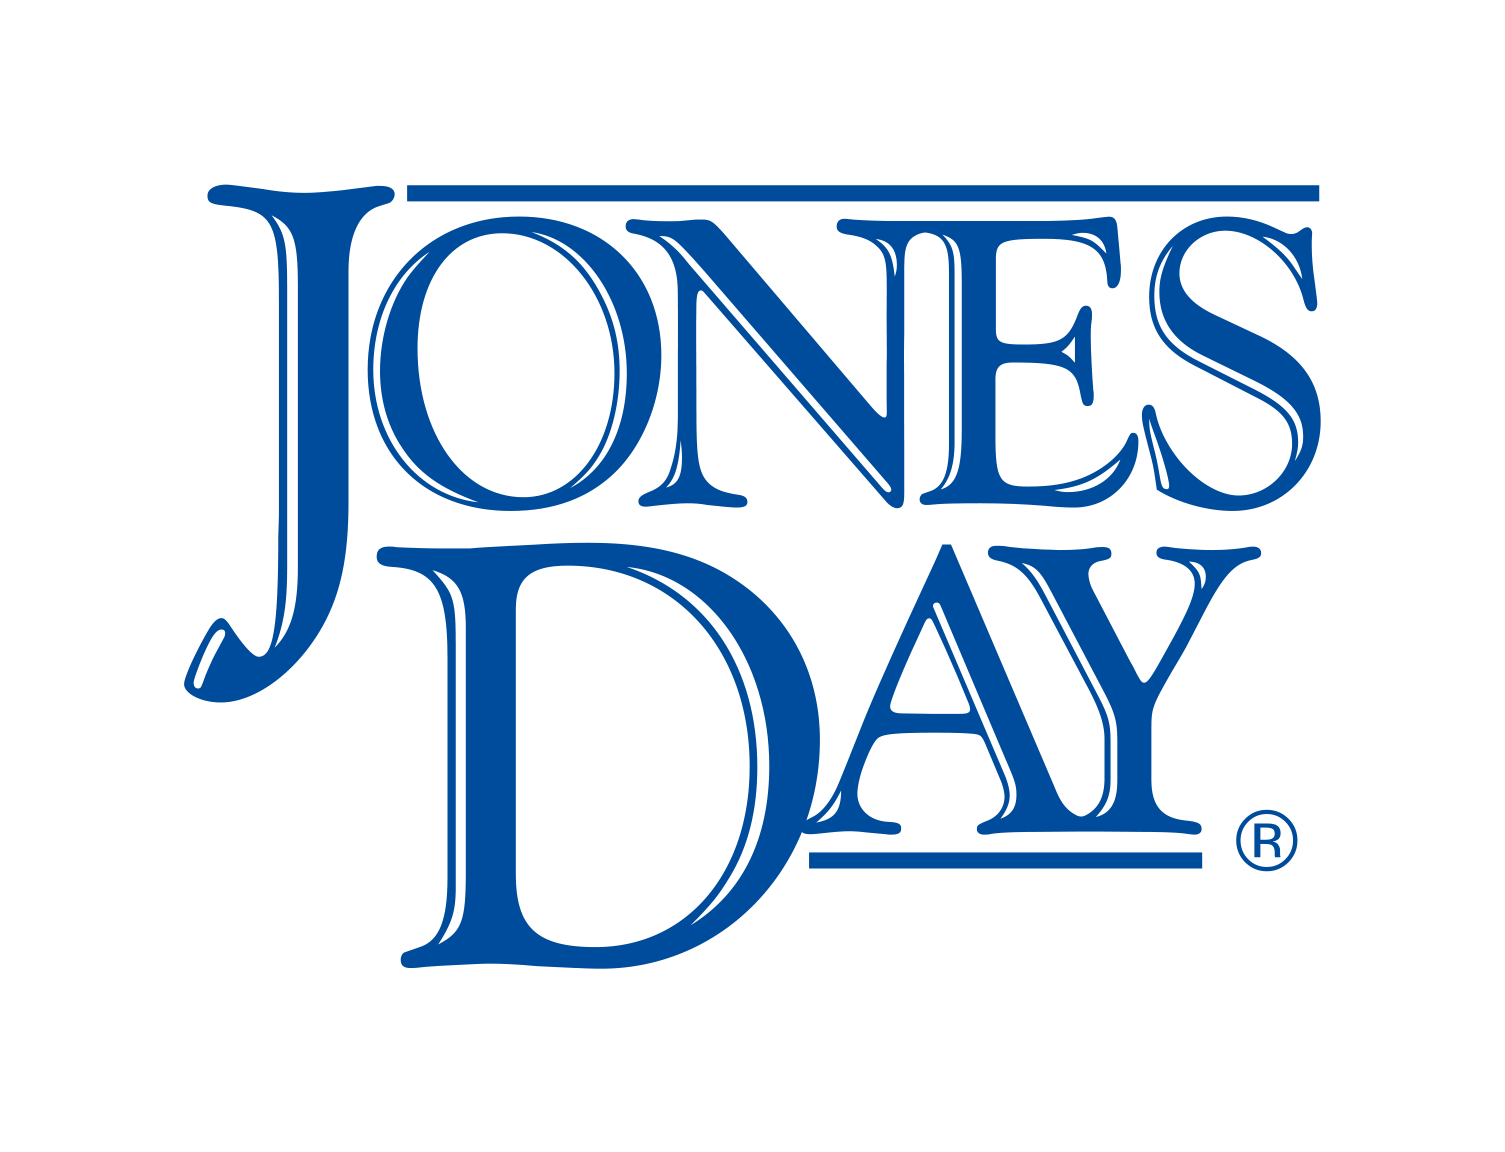 jones day logo